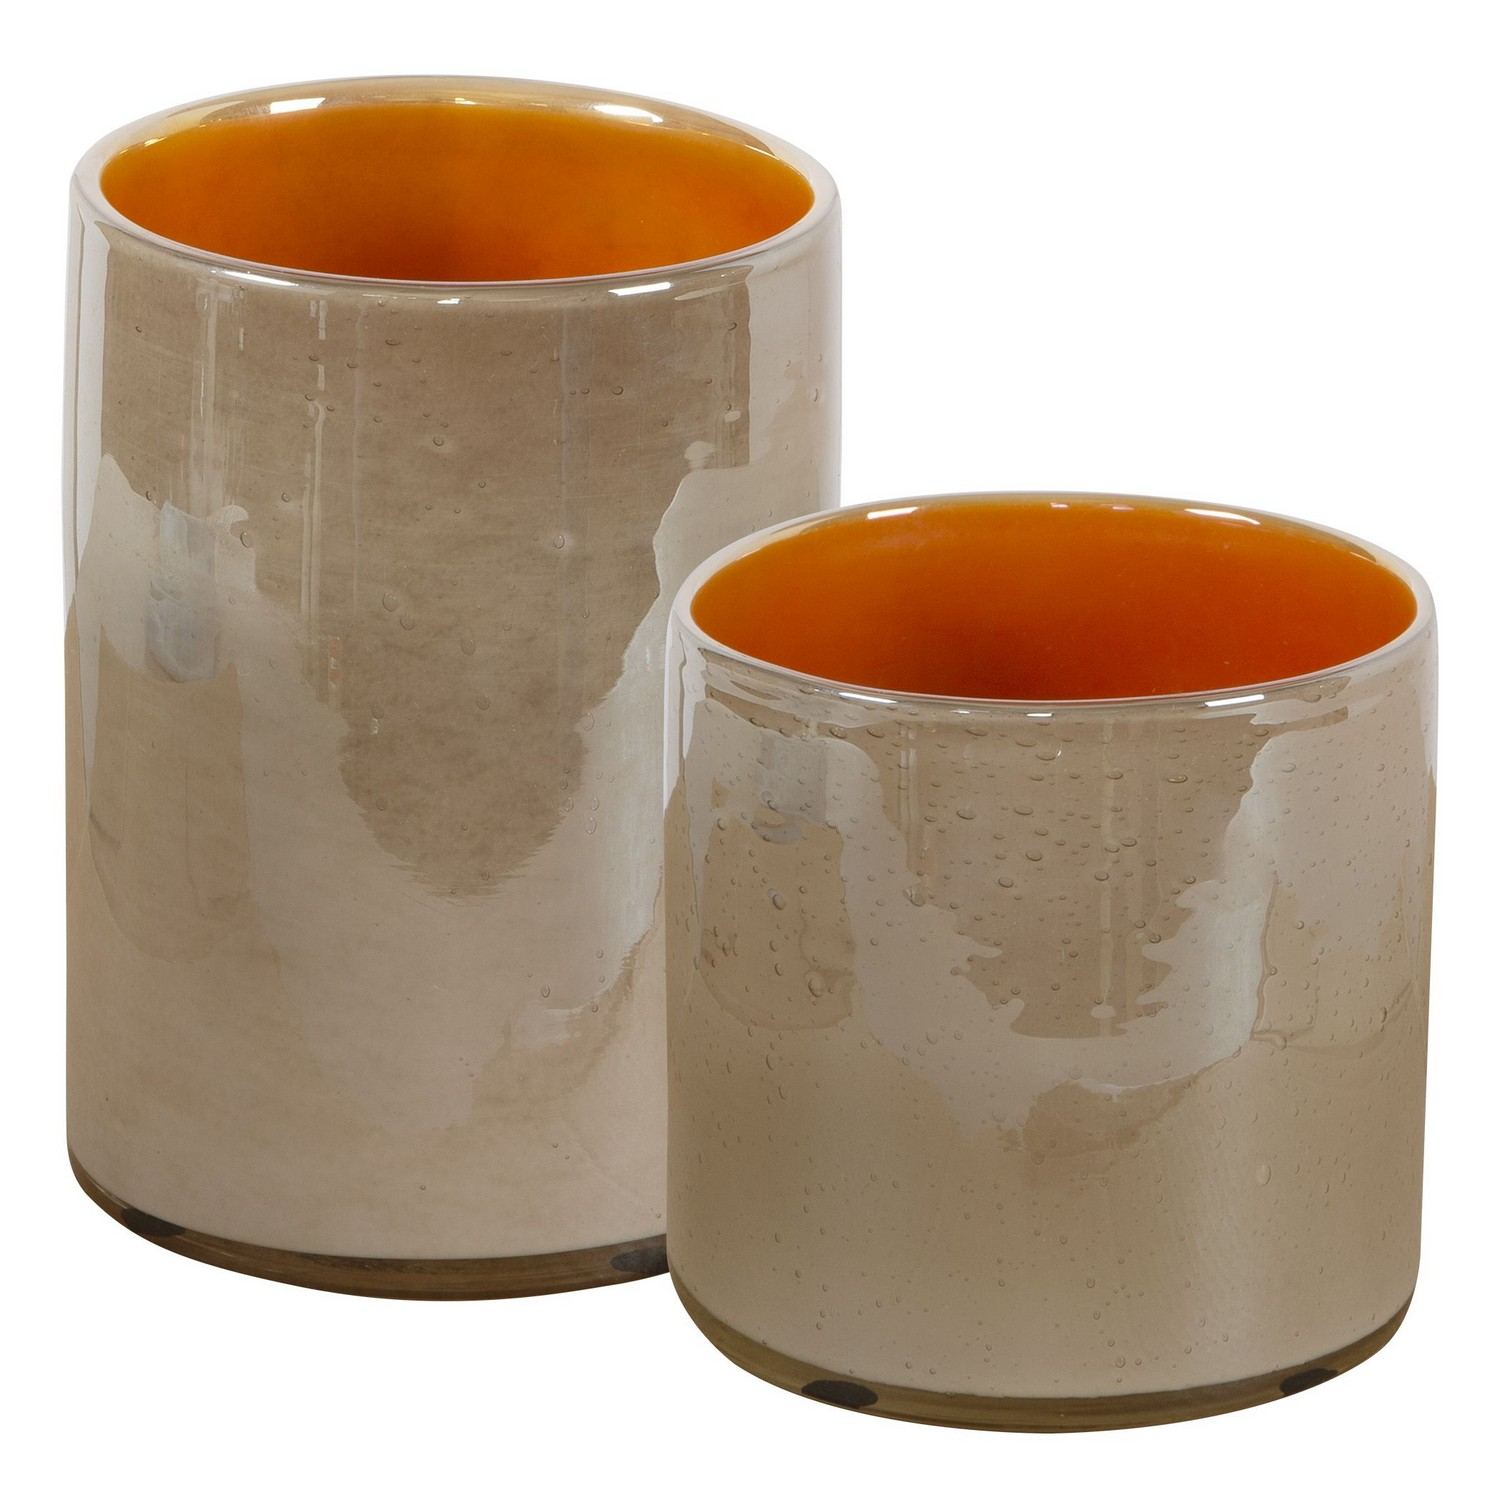 Uttermost Tangelo Vases - Set of 2 - Beige Orange